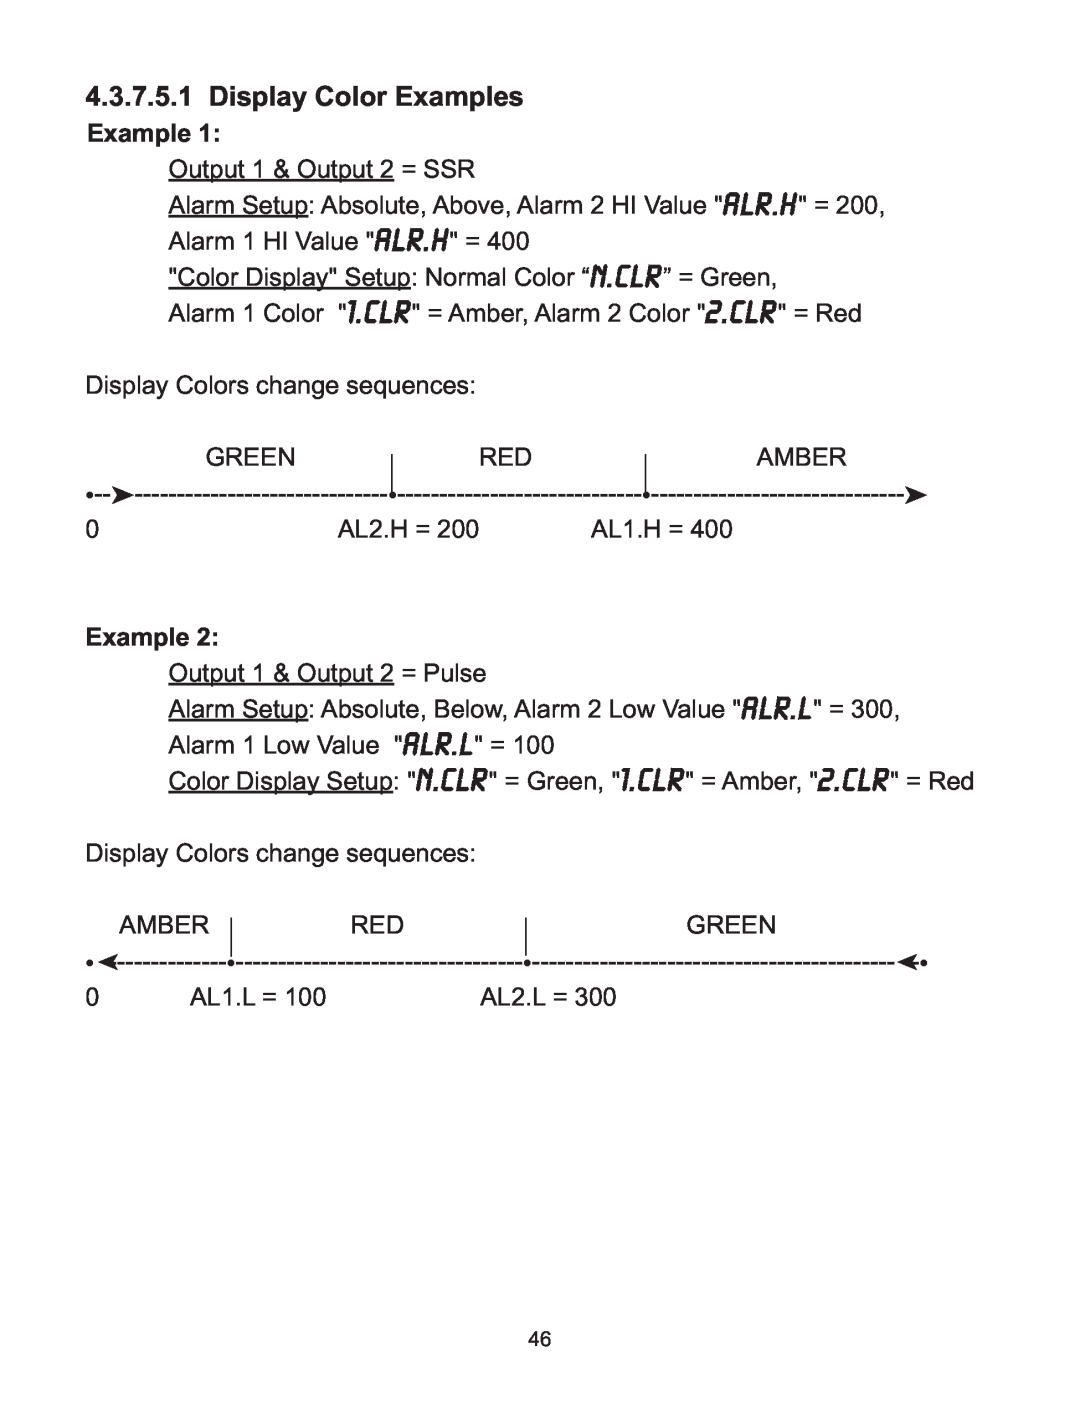 Omega WI8XX-U manual Display Color Examples, 2.CLR 